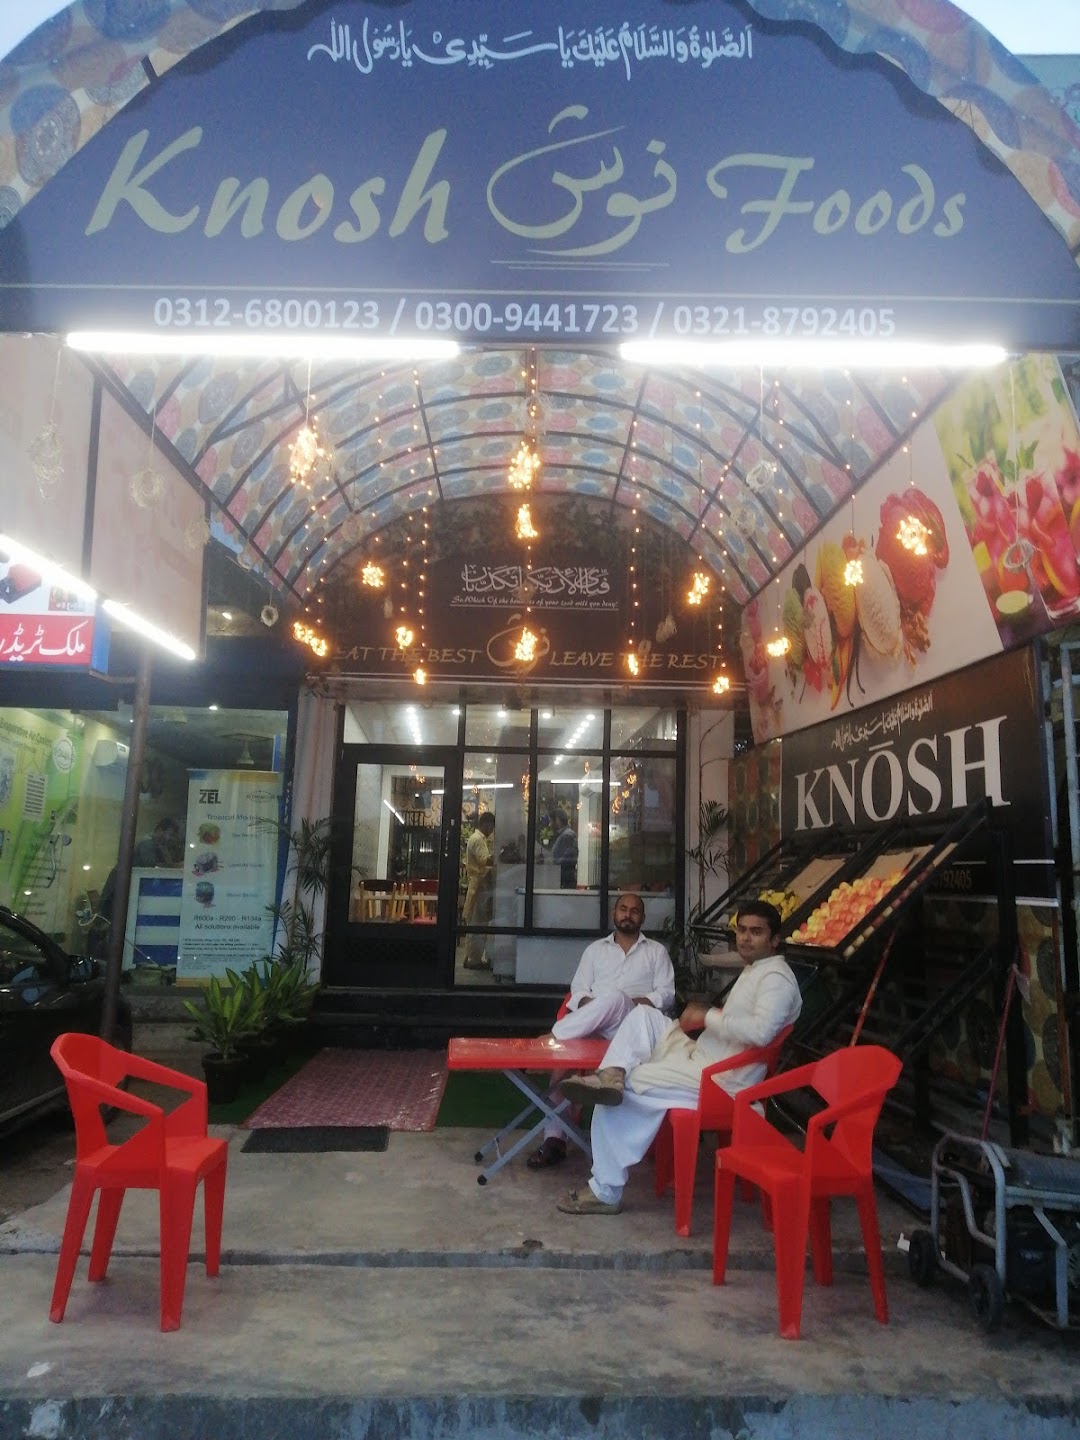 KNSH FOODS